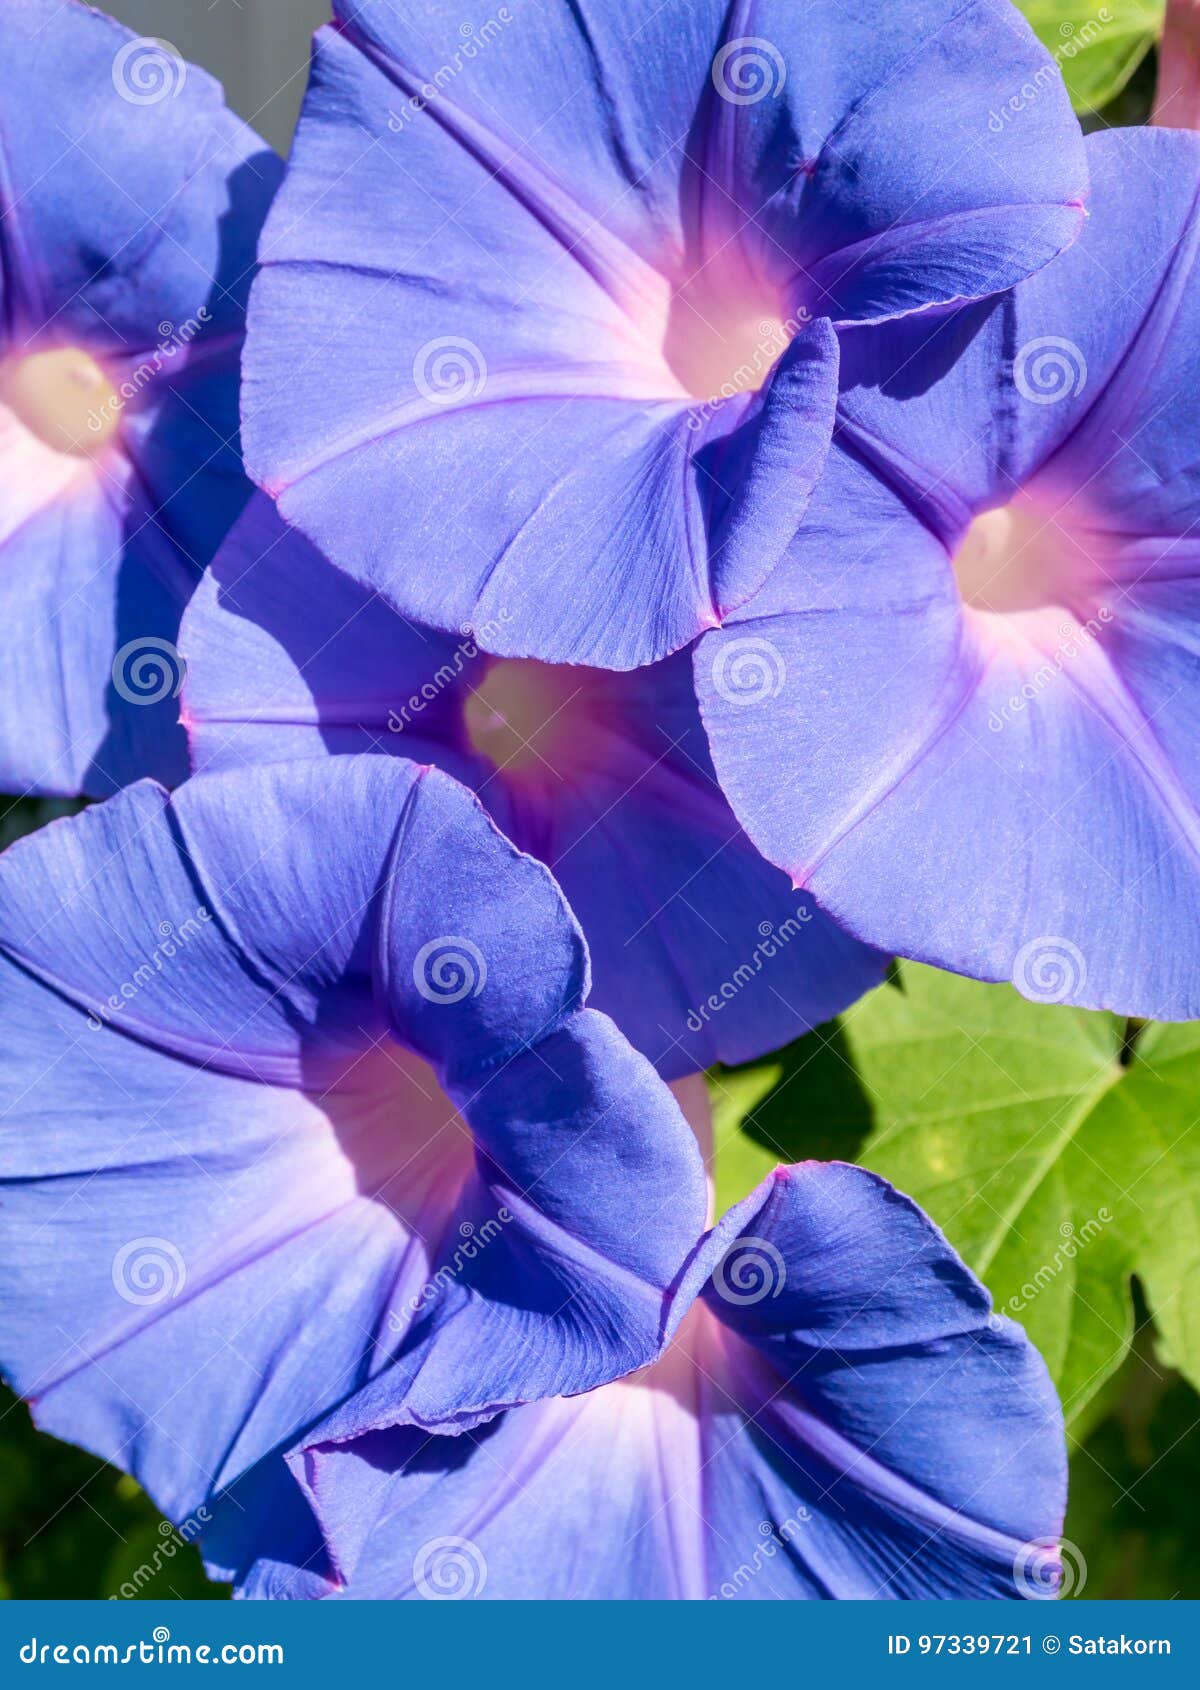 Ivy Flowers, Purple Flowers Stock Image - Image of full, beautiful: 97339721